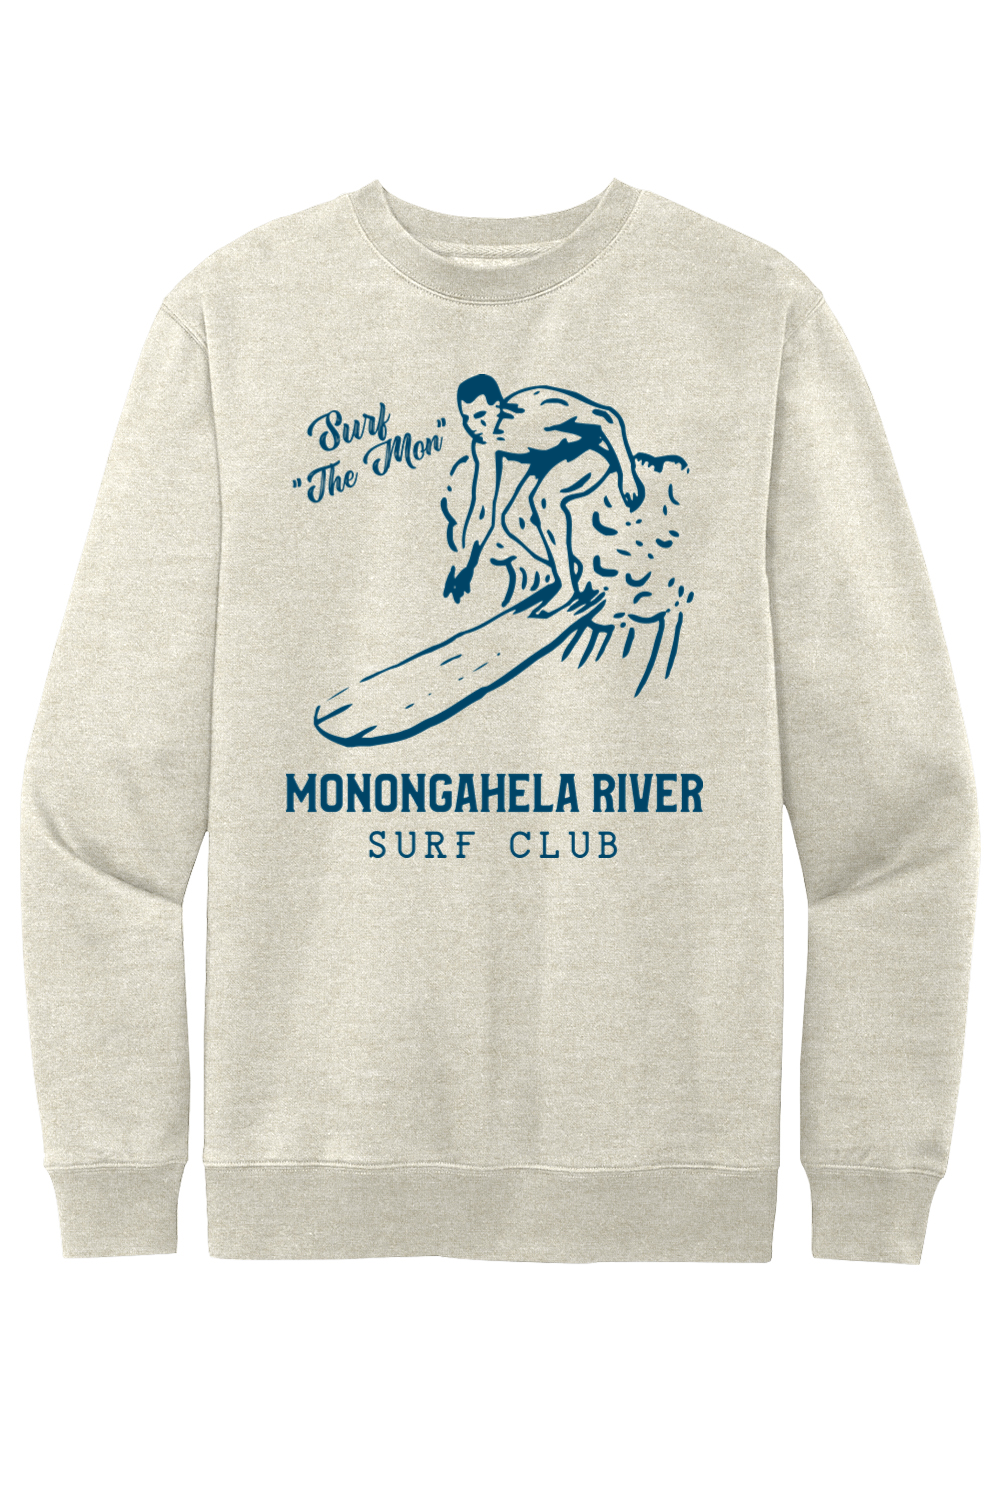 Monongahela River Surf Club - Fleece Crewneck Sweatshirt - Yinzylvania